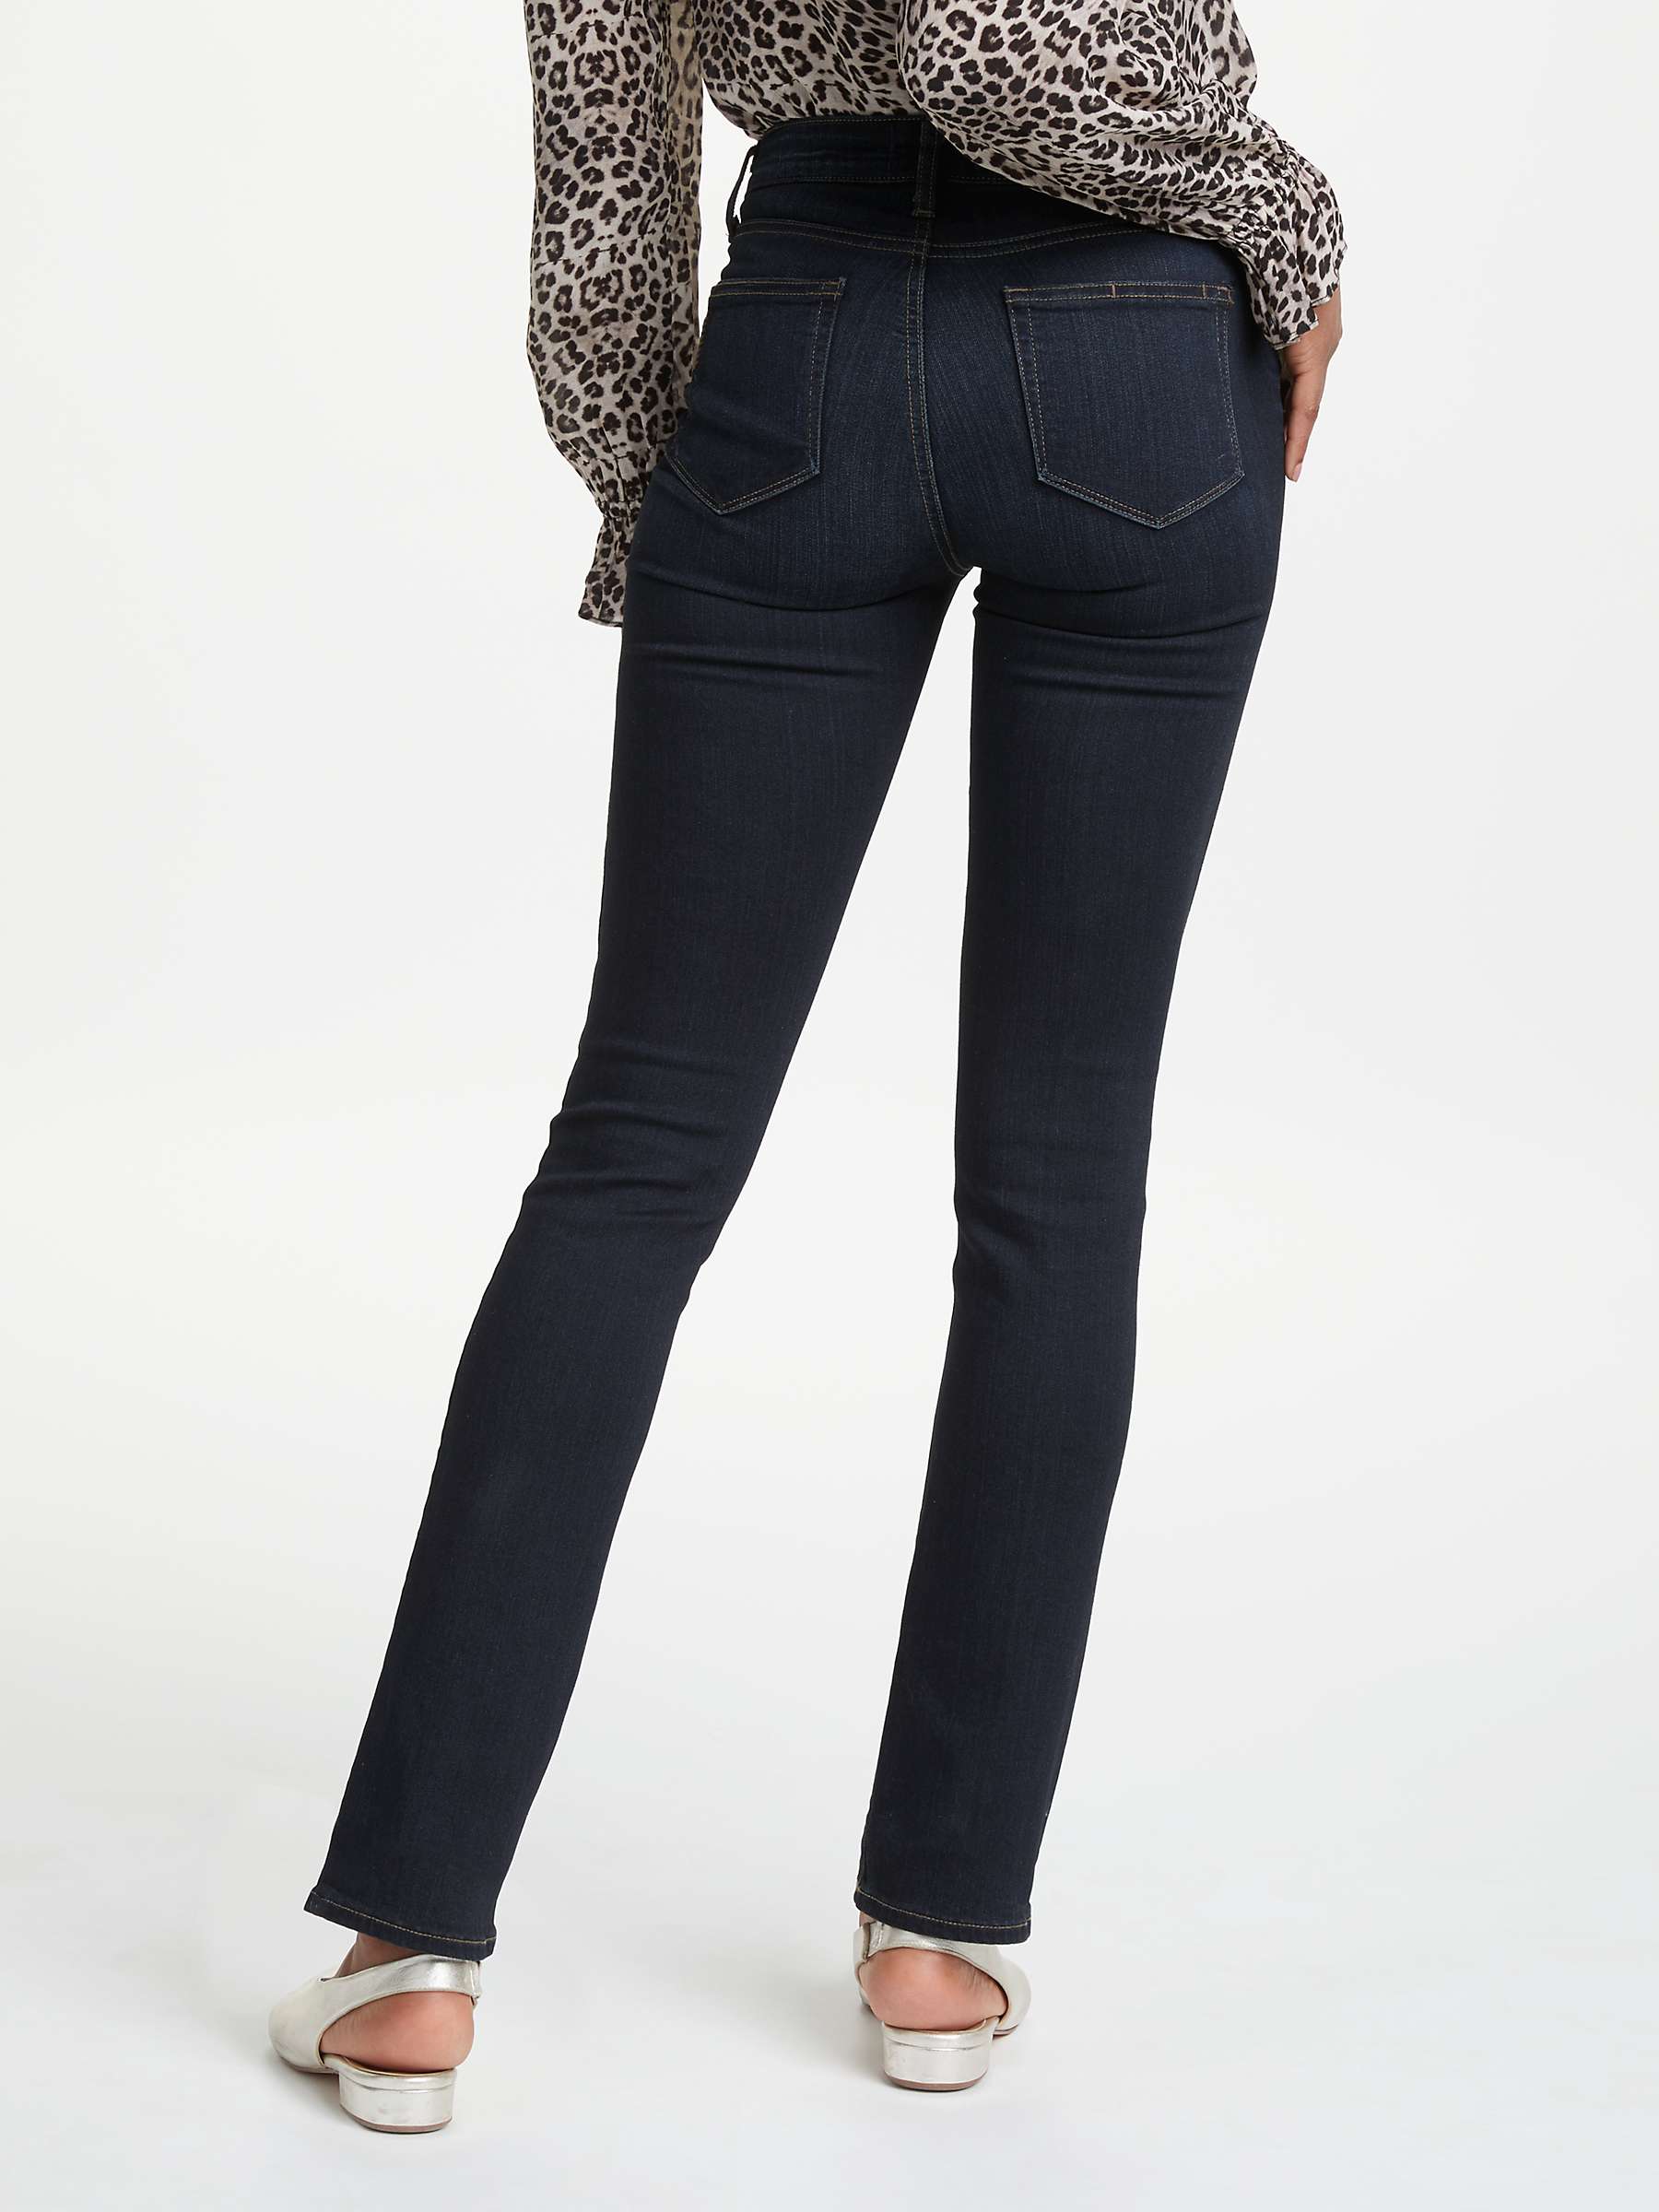 Buy PAIGE Hoxton Straight Leg Jeans, Mona Online at johnlewis.com